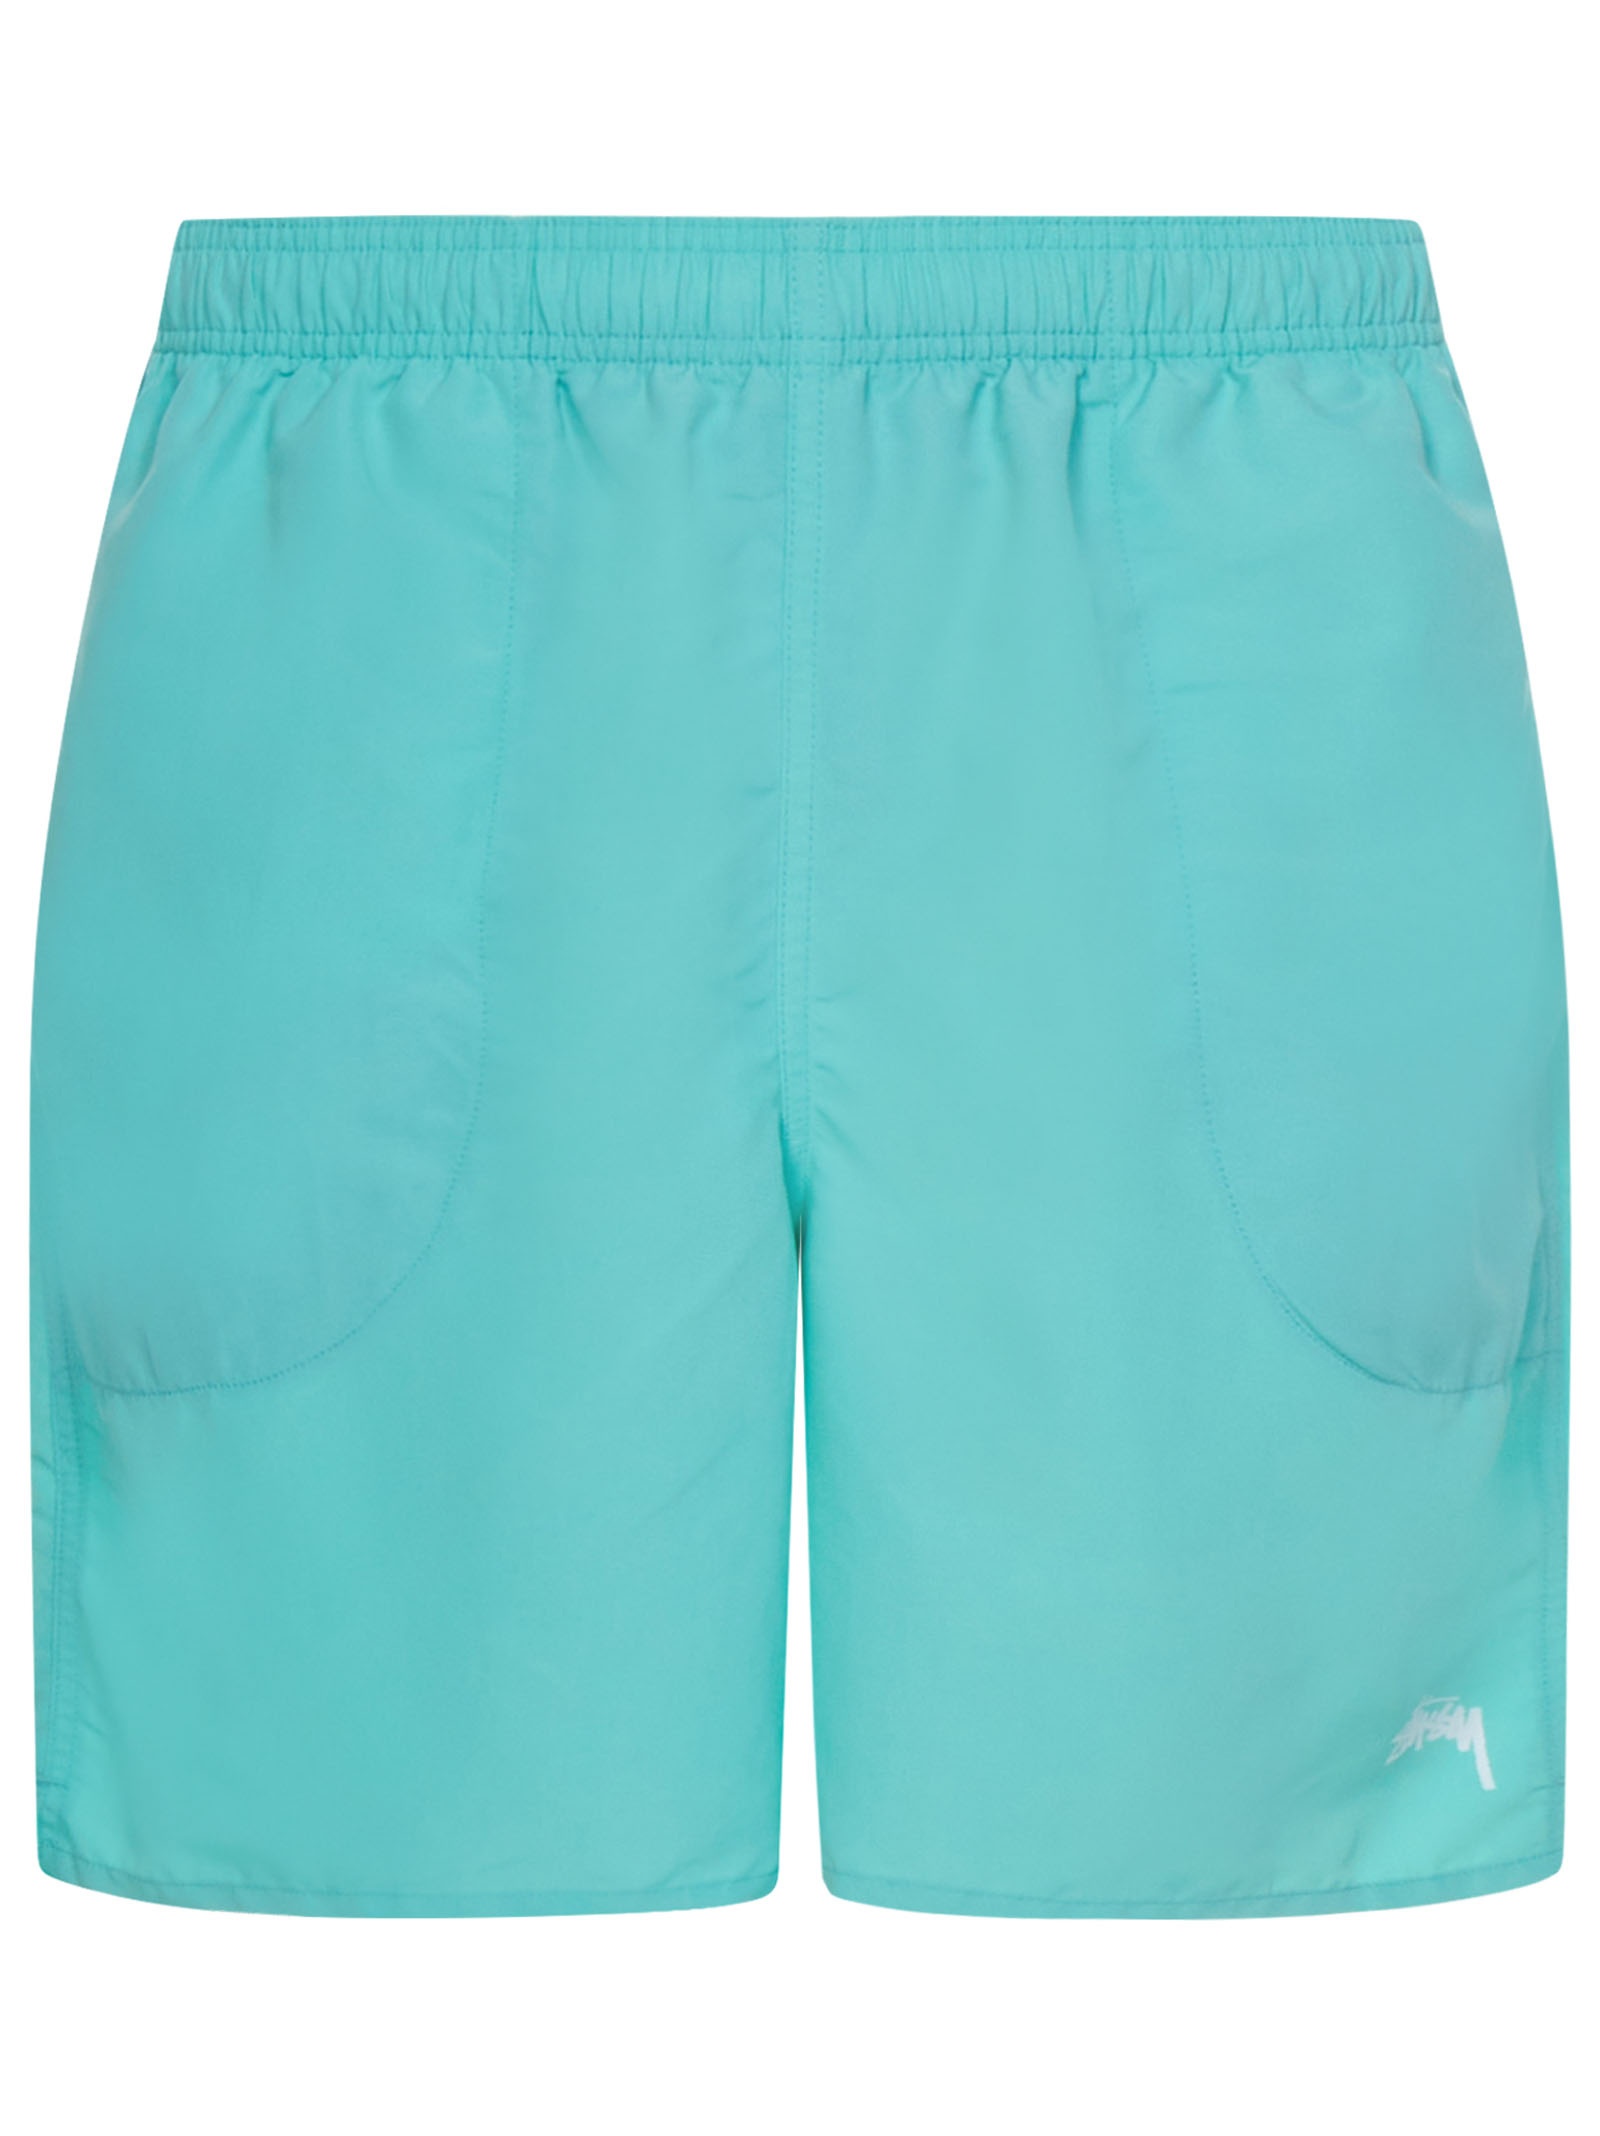 Swimsuit in aquamarine nylon with screen-printed logo on the left leg. - 1